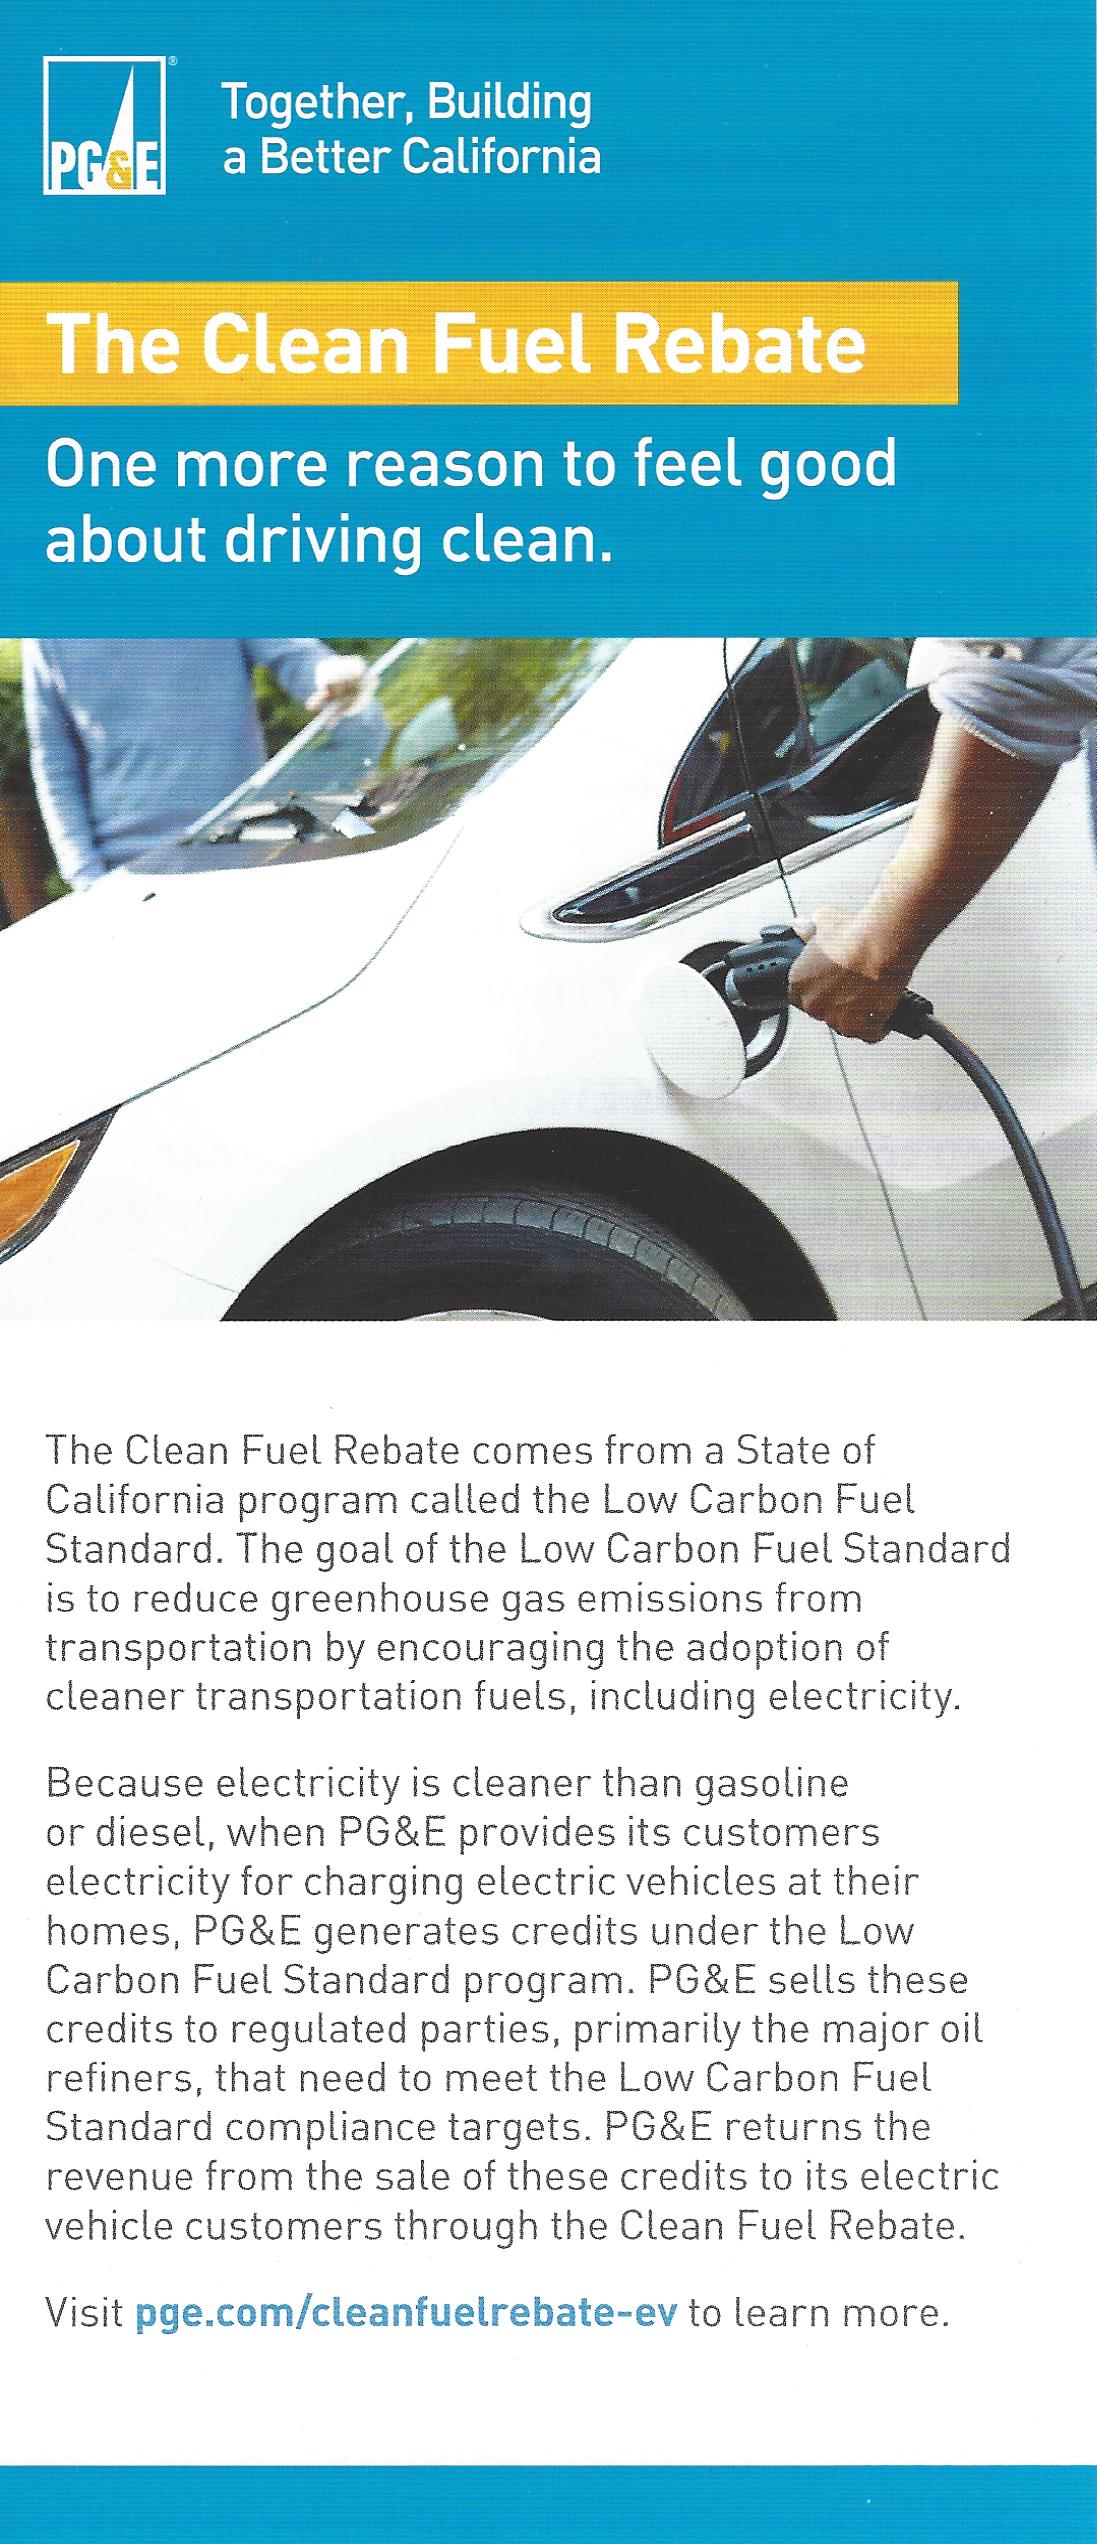 pg-e-clean-fuel-rebate-program-brochure-tesla-motors-club